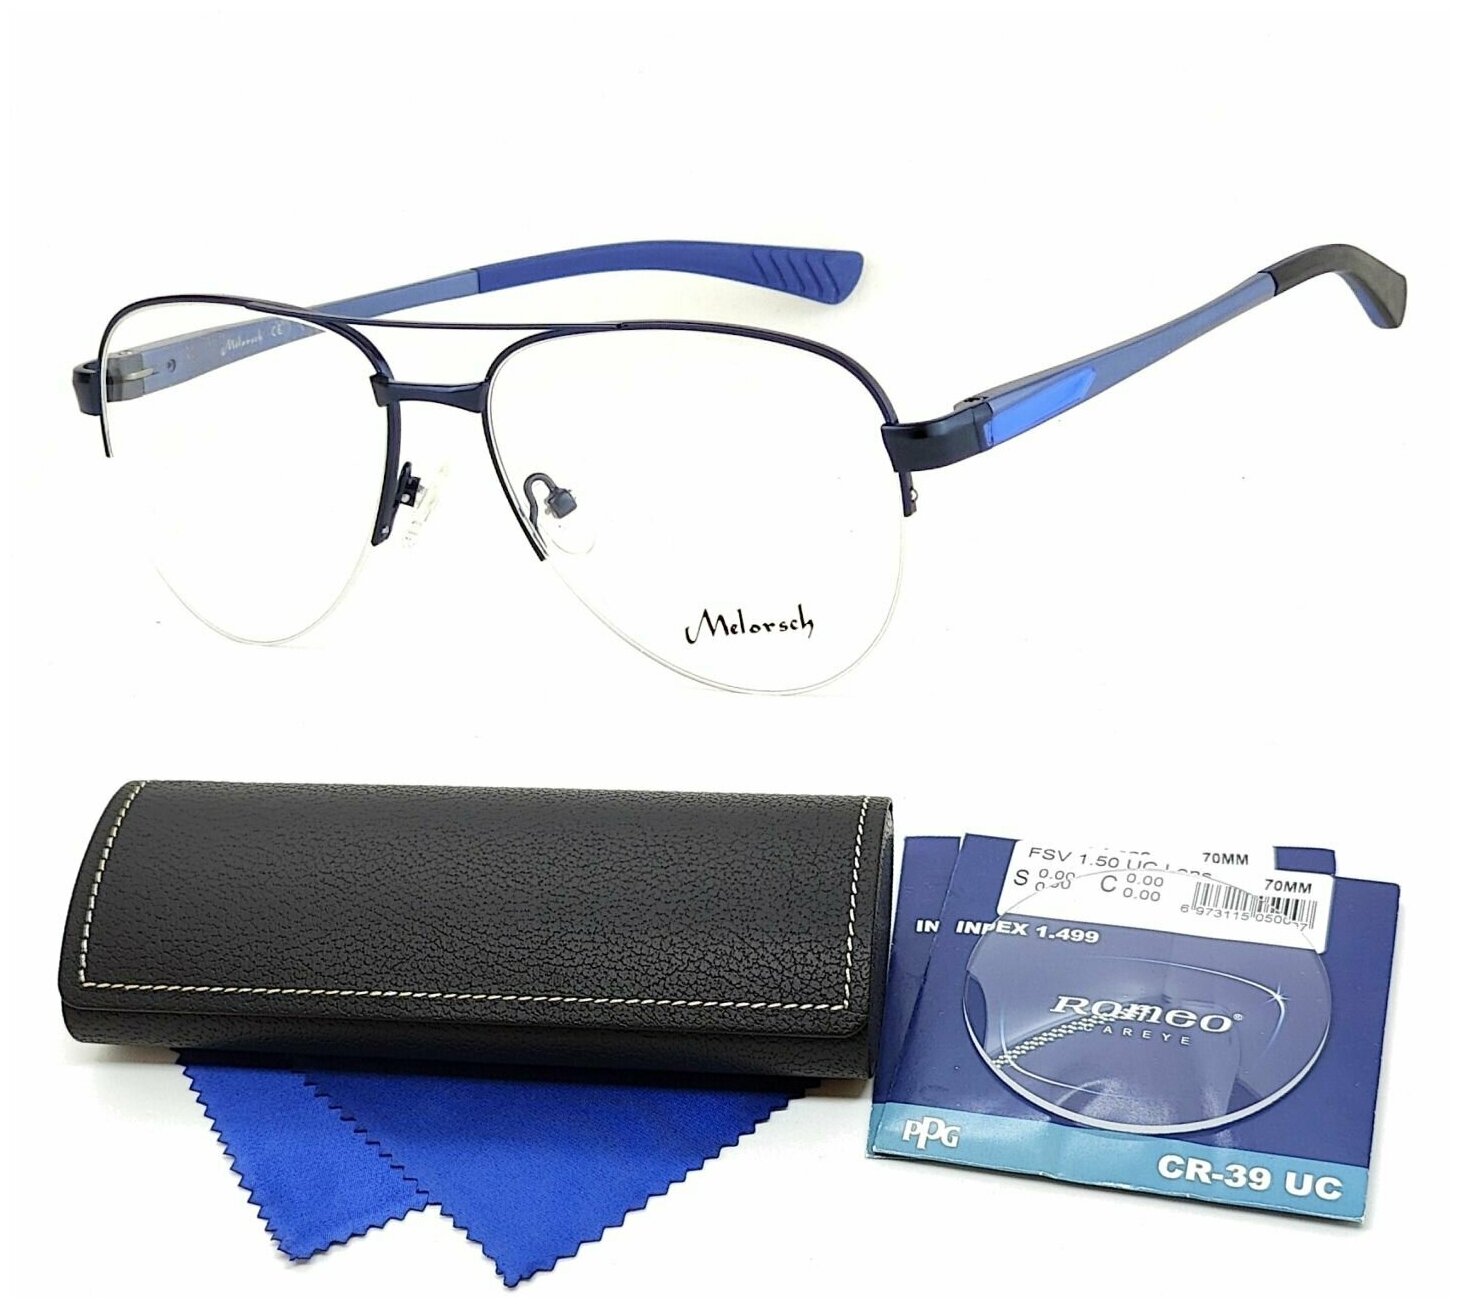 Спортивные очки с футляром на магните Melorsch мод. 8010 с линзами ROMEO 1.499 CR-39